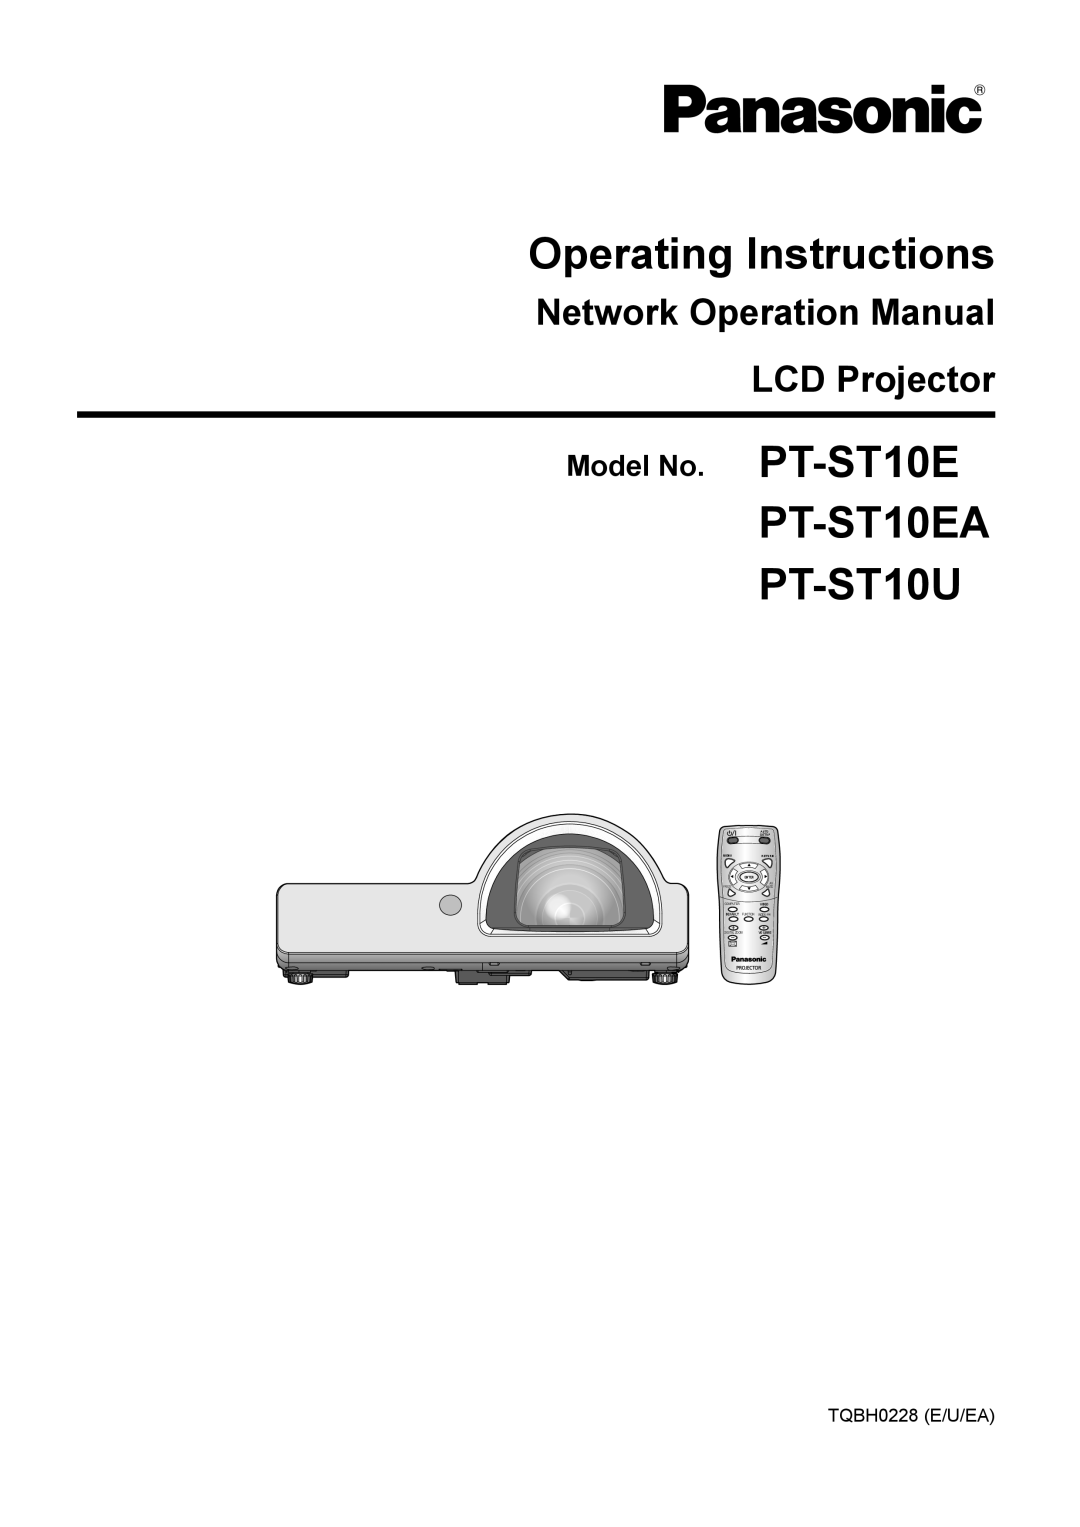 Panasonic manual Model No. PT-ST10E, Operating Instructions, PT-ST10EA PT-ST10U, Network Operation Manual LCD Projector 